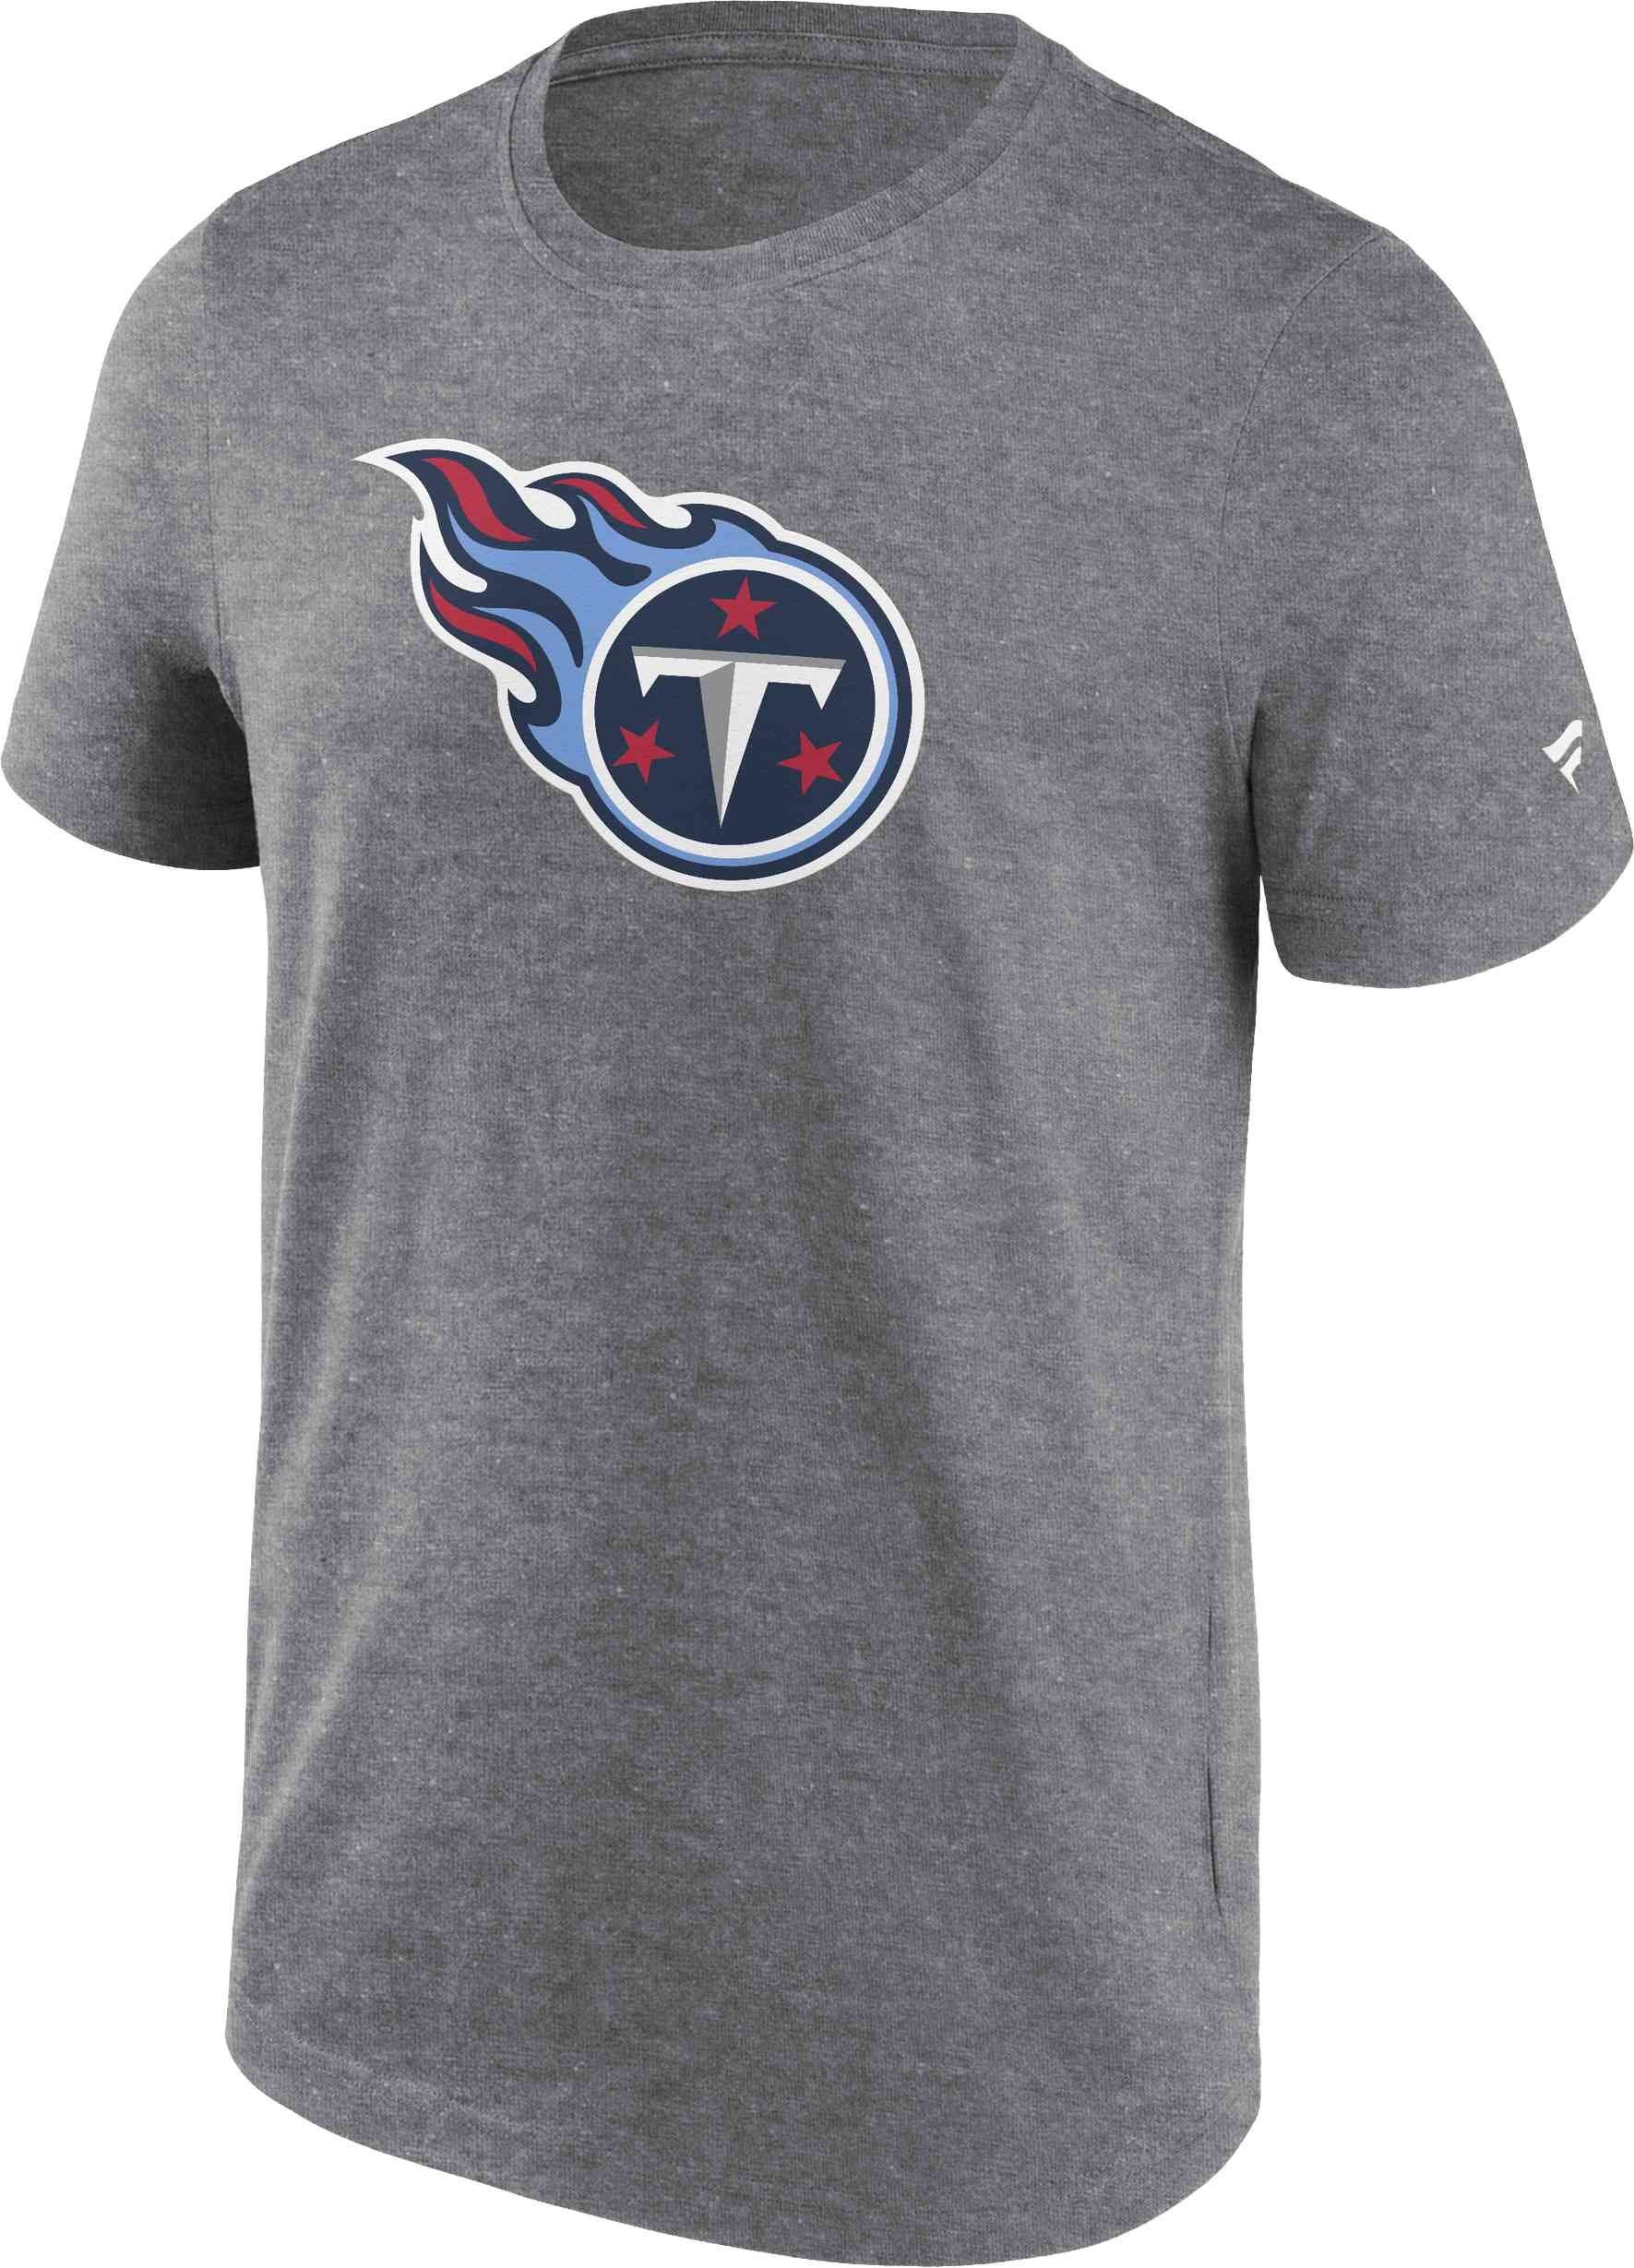 Fanatics T-Shirt NFL Tennessee Titans Primary Logo Graphic